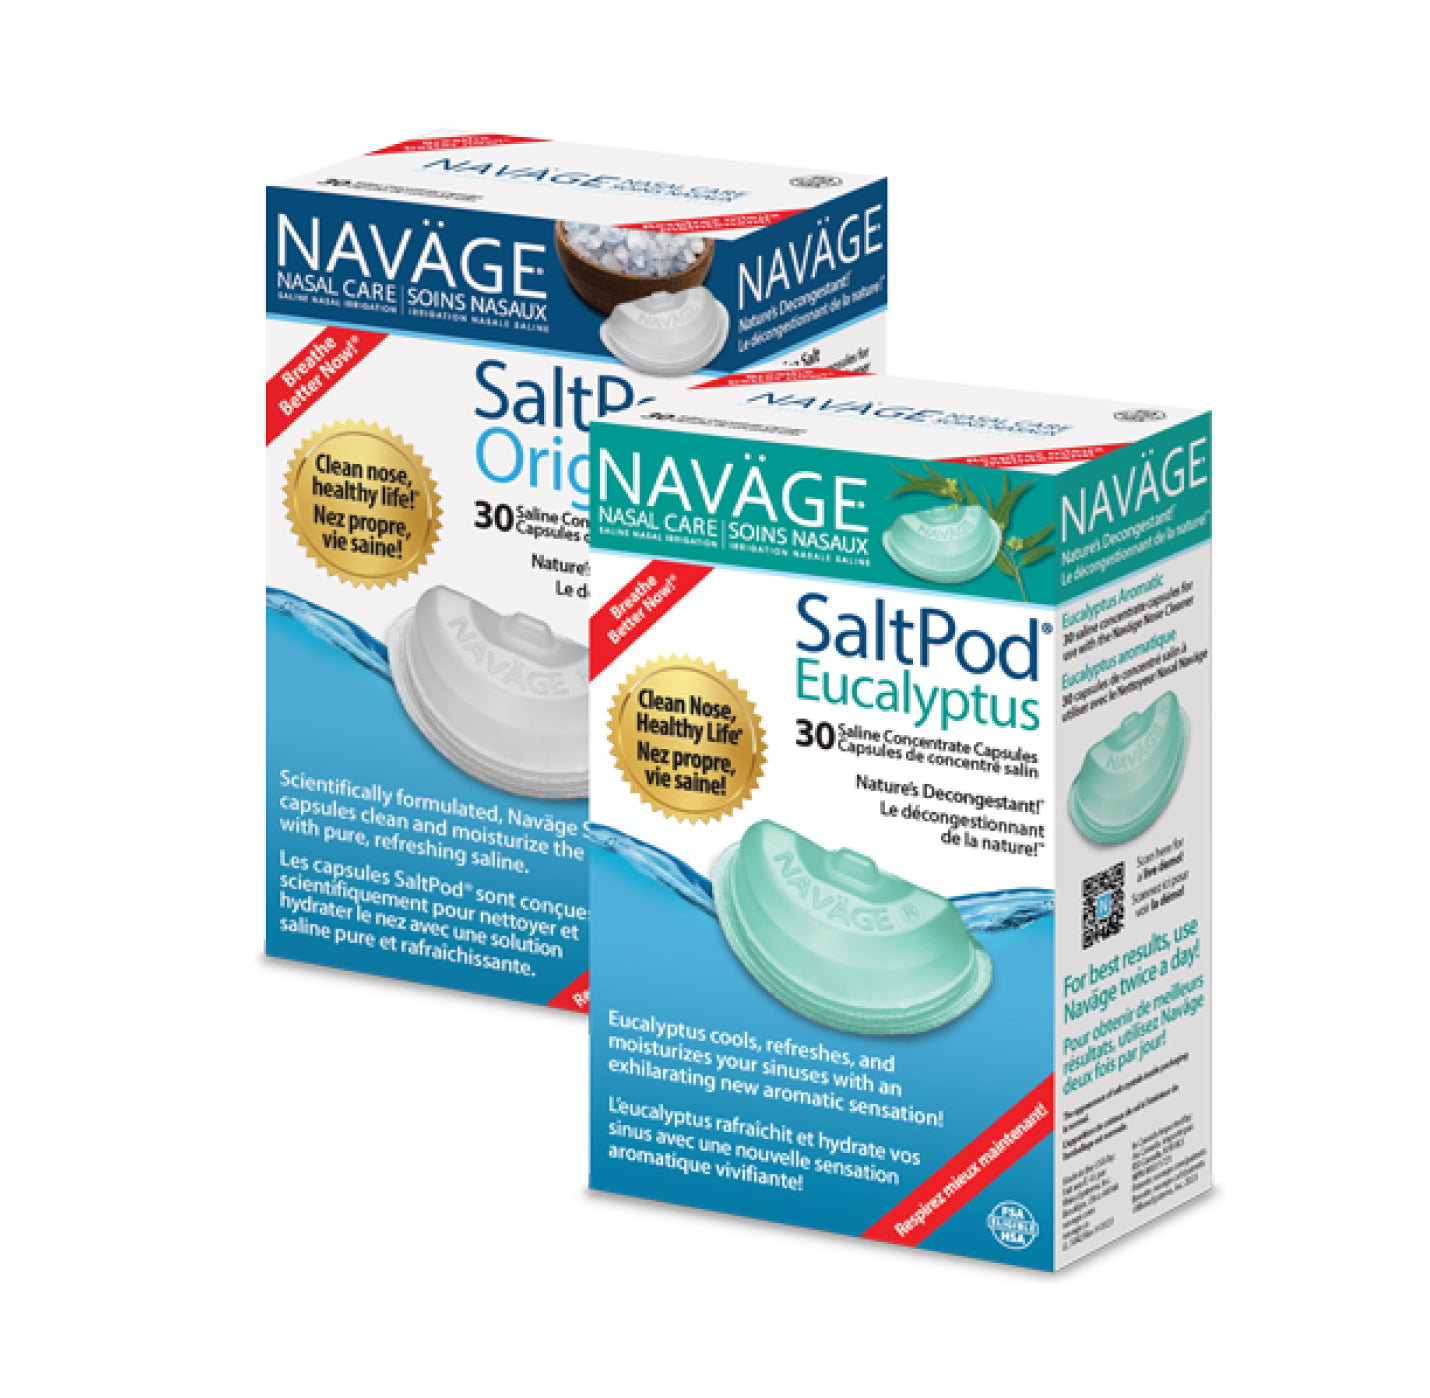 NEW Navage Nasal Care Saline Nasal Irrigation Model India